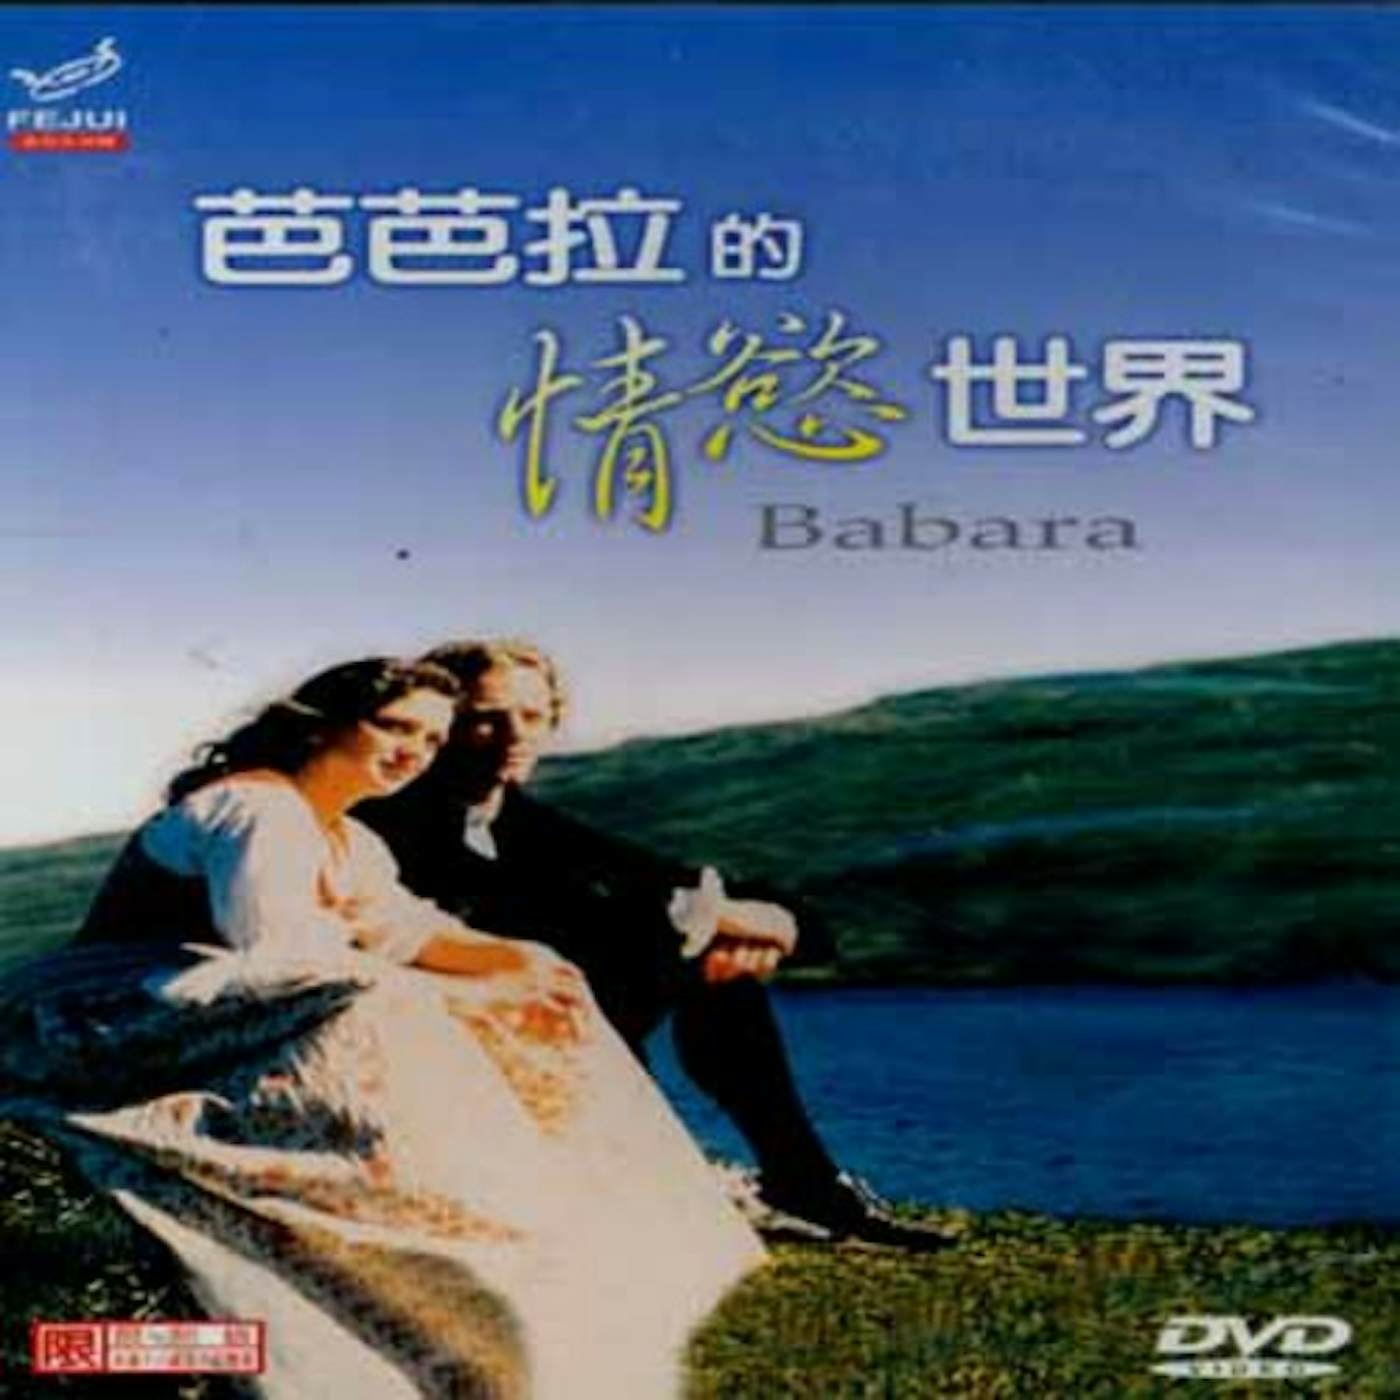 BARBARA DVD